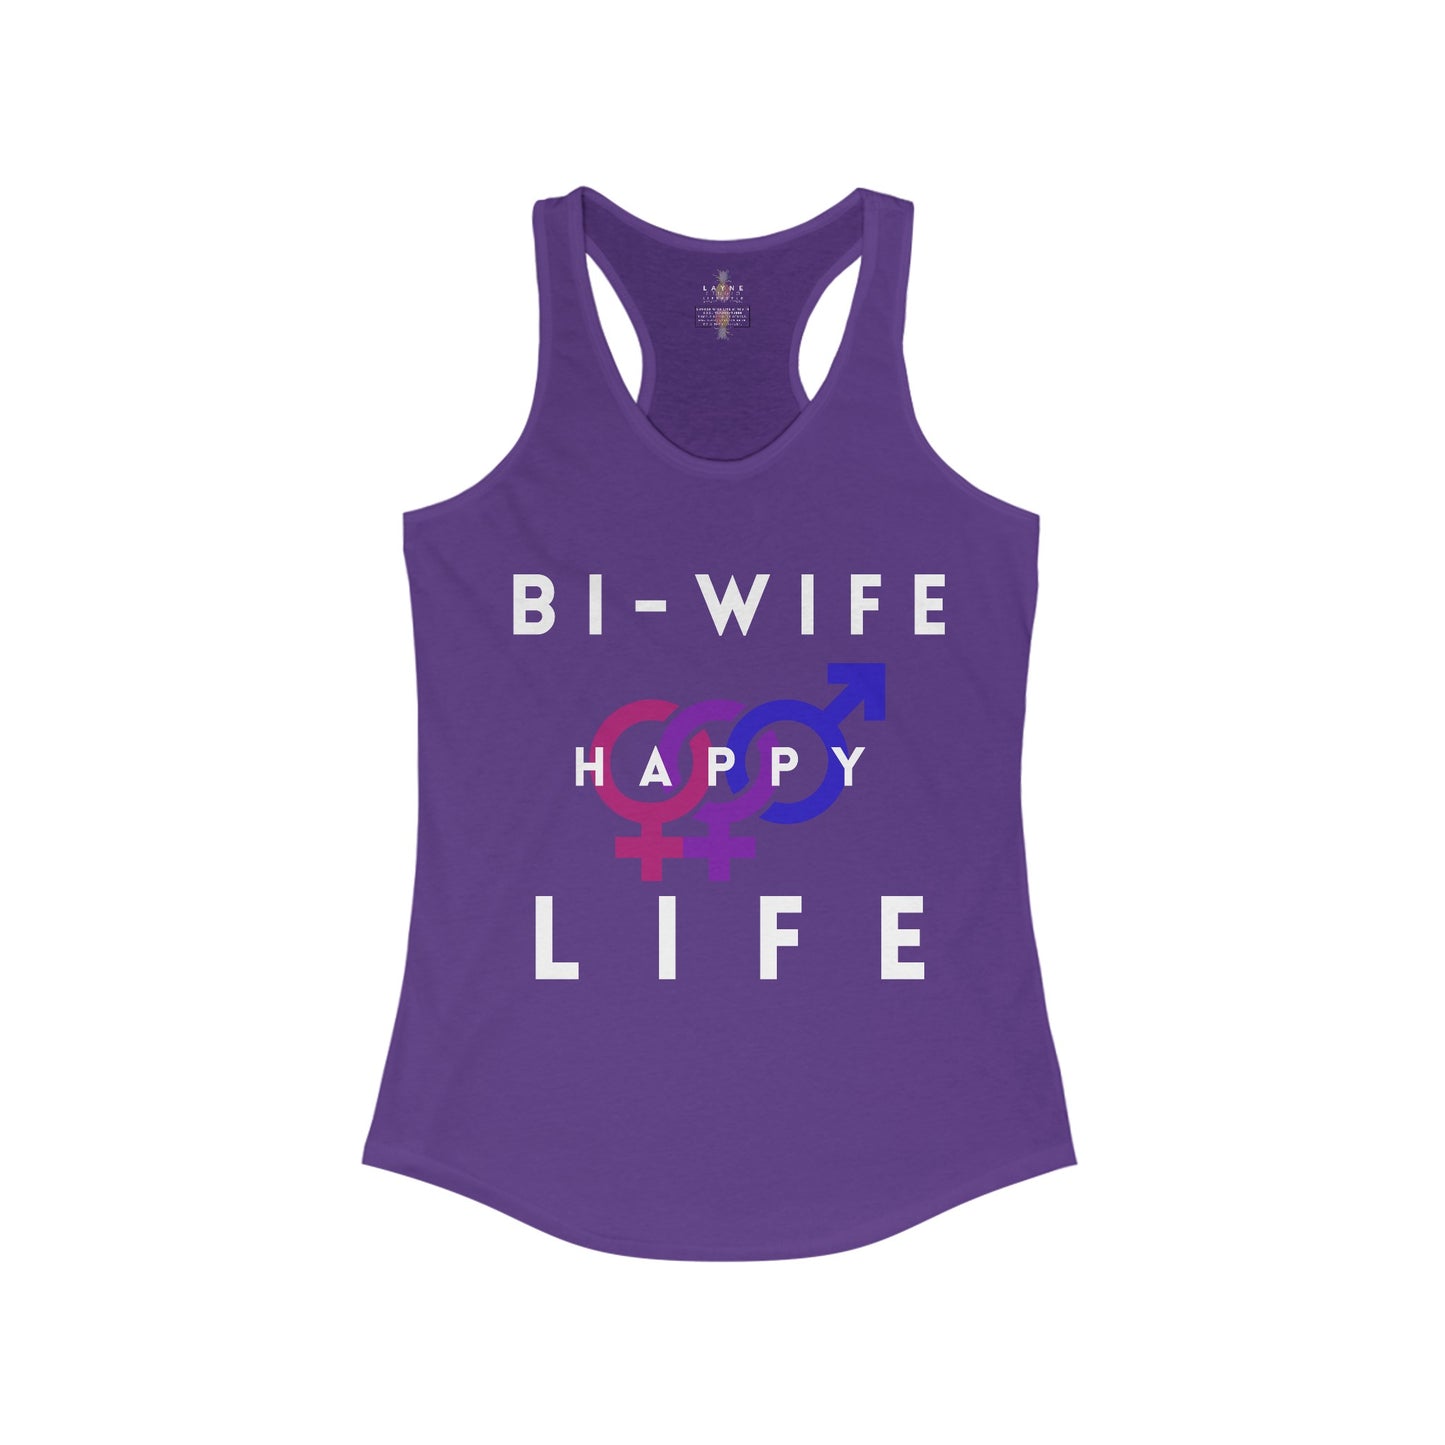 Front View of Layne Studios "Bi-Wife Happy Life" Graphic Solid Purple Rush Tank-Top